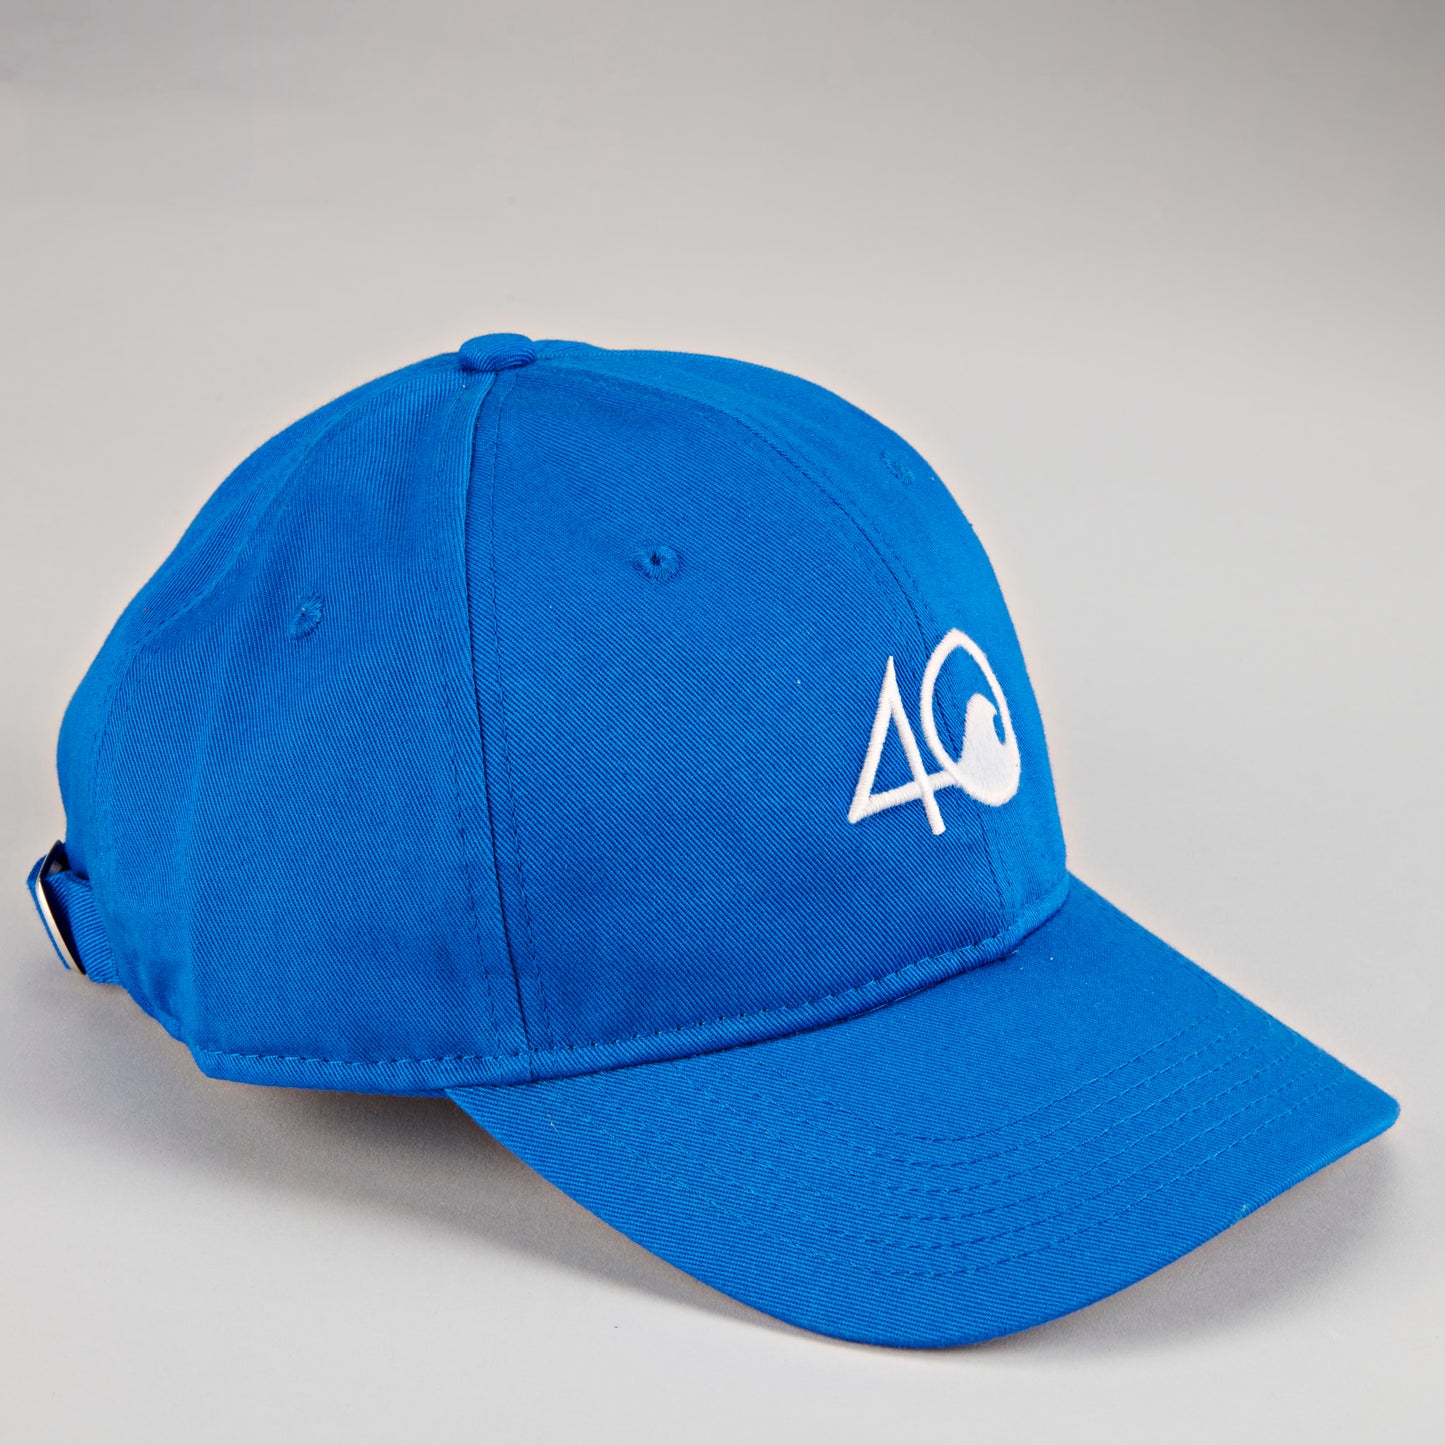 4ocean Chapeau Profil Bas - Logo 4O